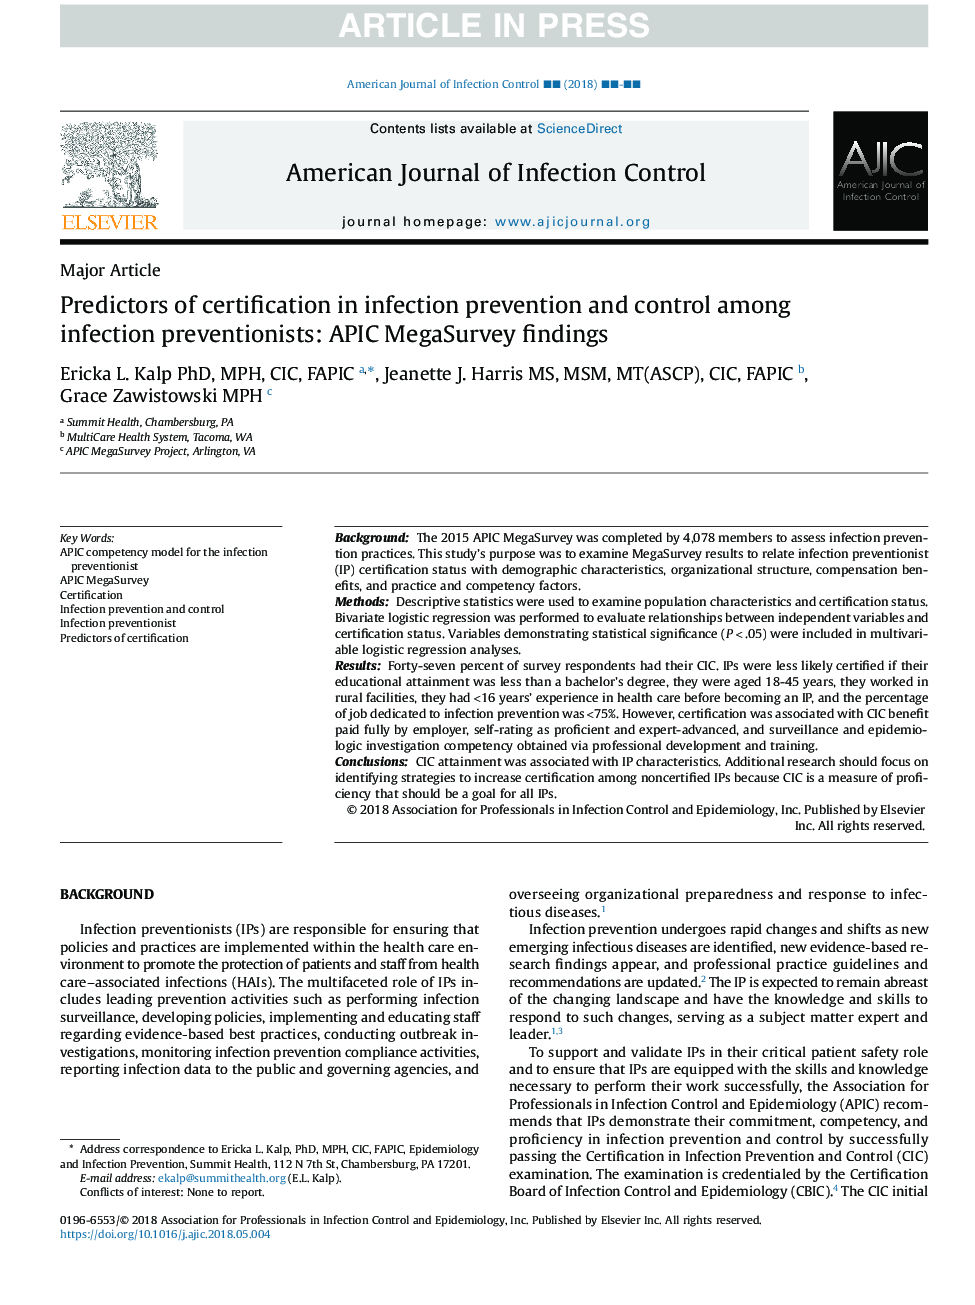 Predictors of certification in infection prevention and control among infection preventionists: APIC MegaSurvey findings